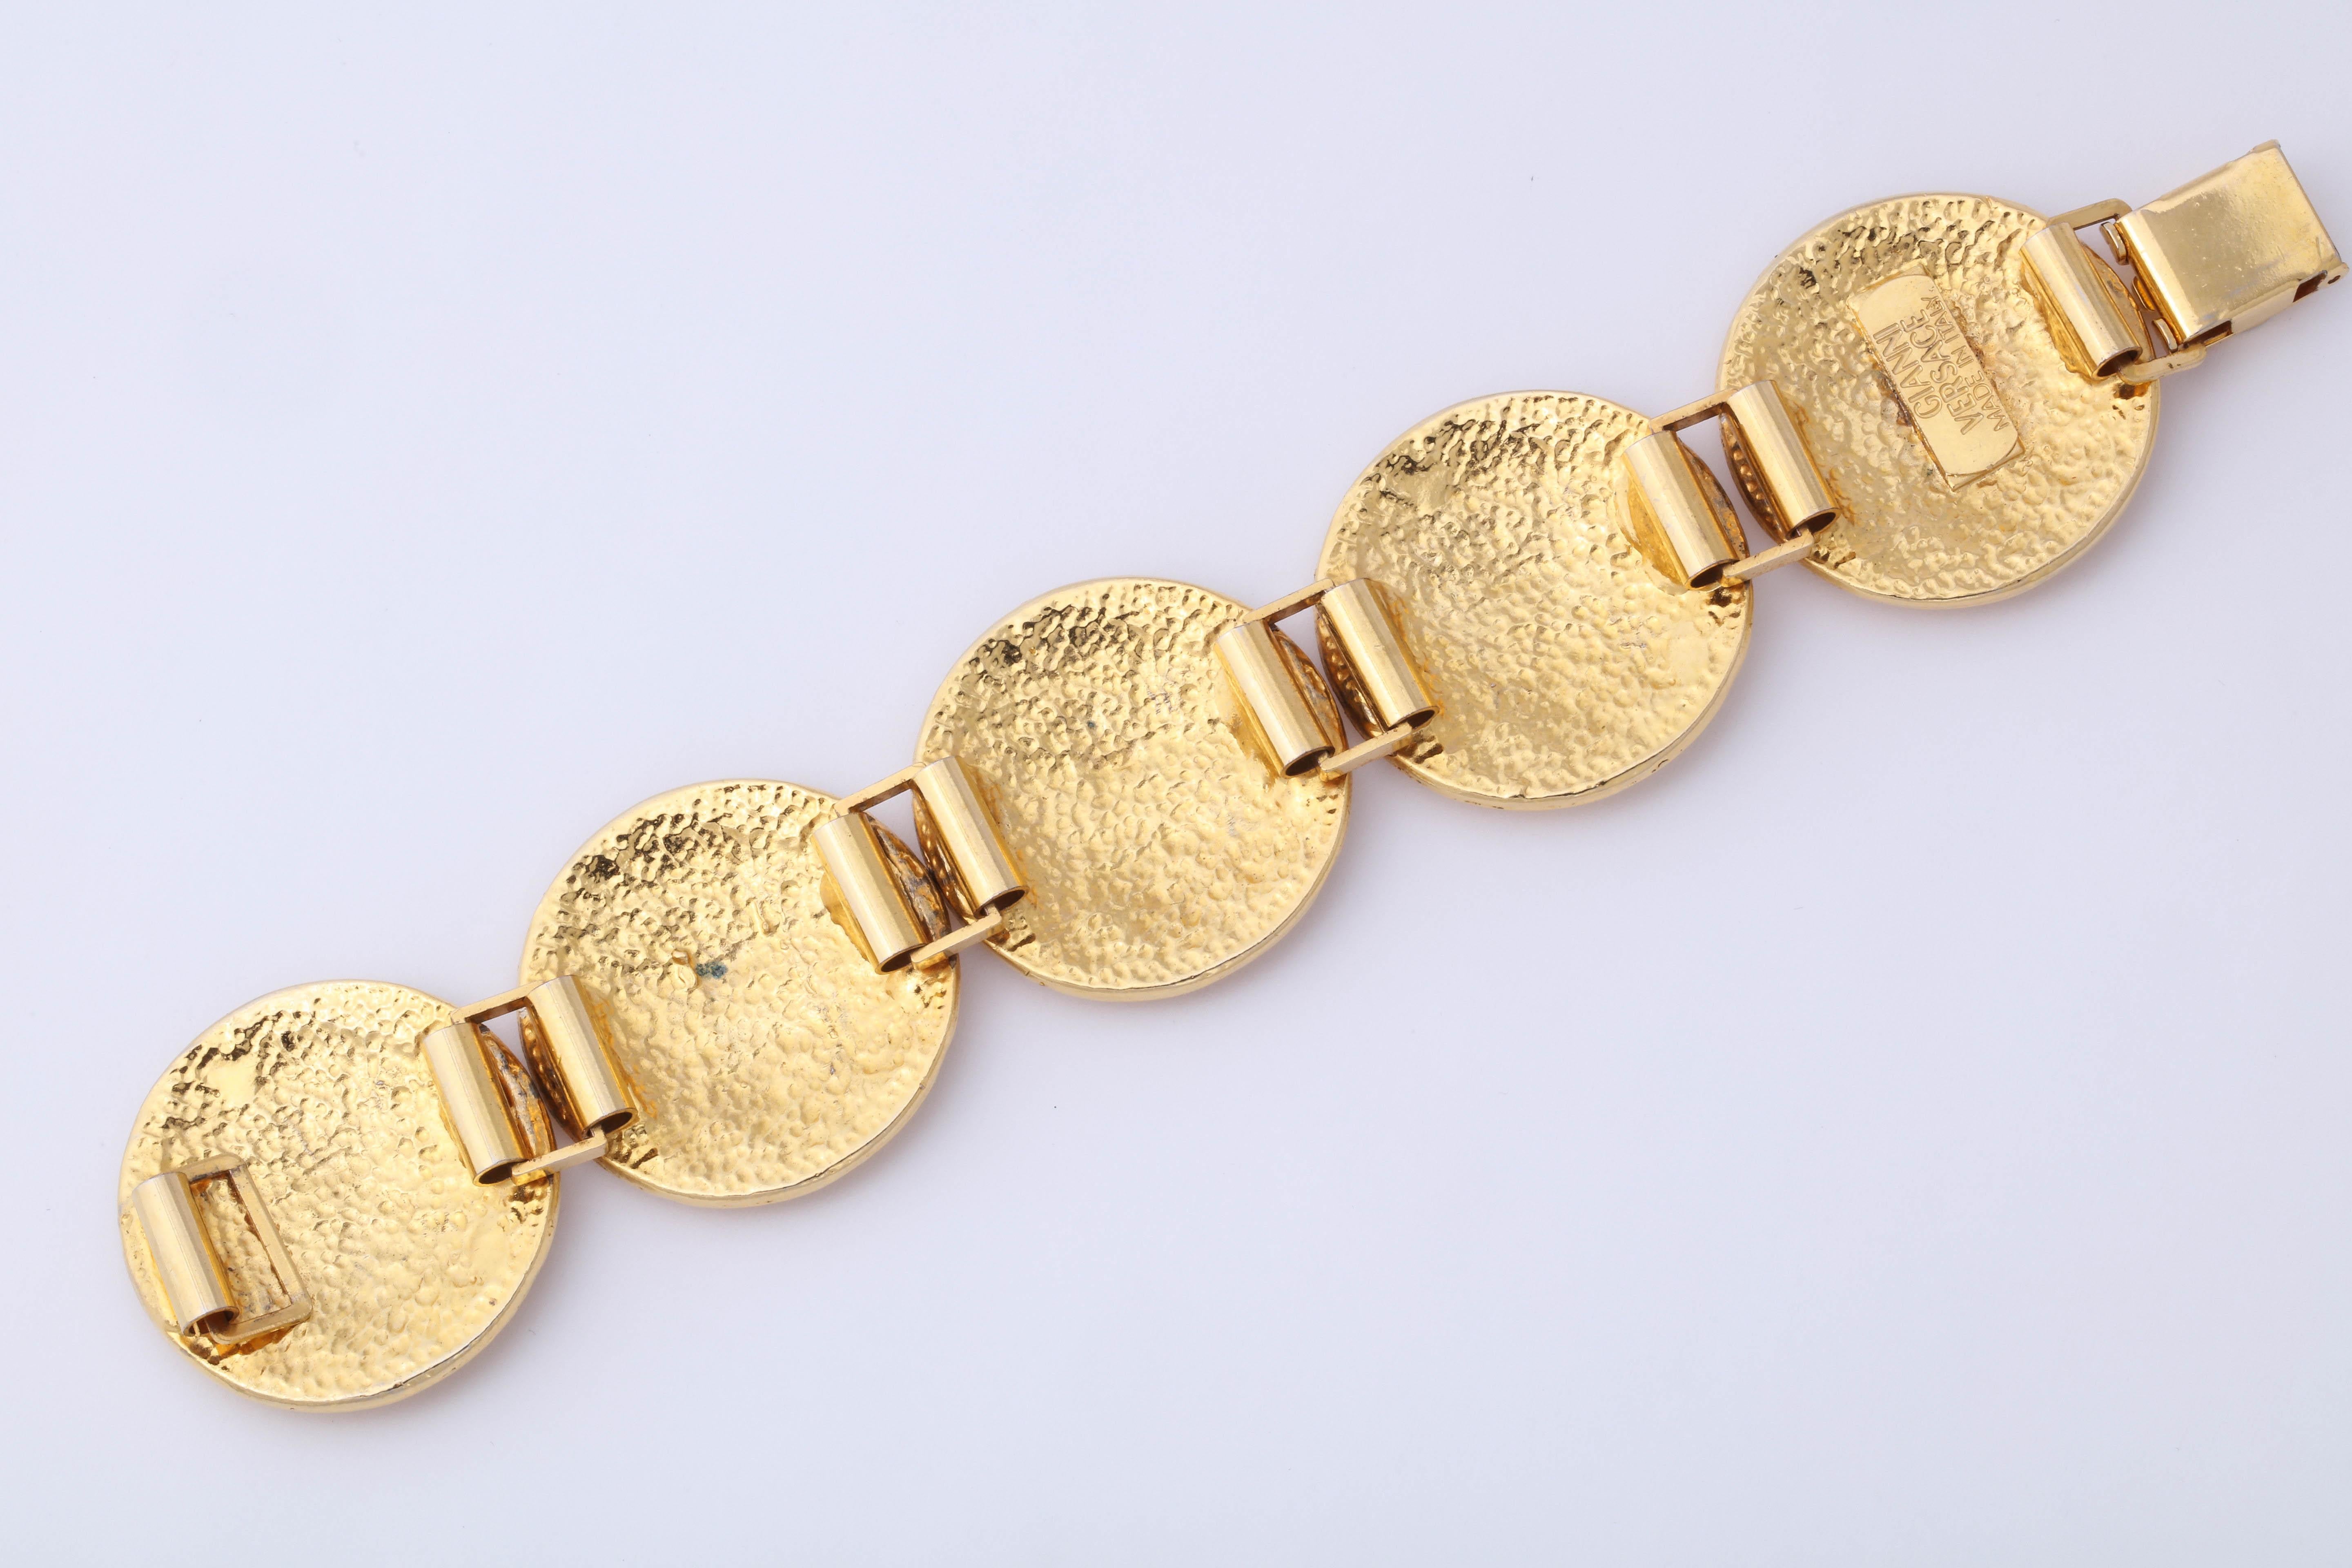 Gianni Versace Massive Gold Toned Bracelet With 5 Medusas For Sale 2